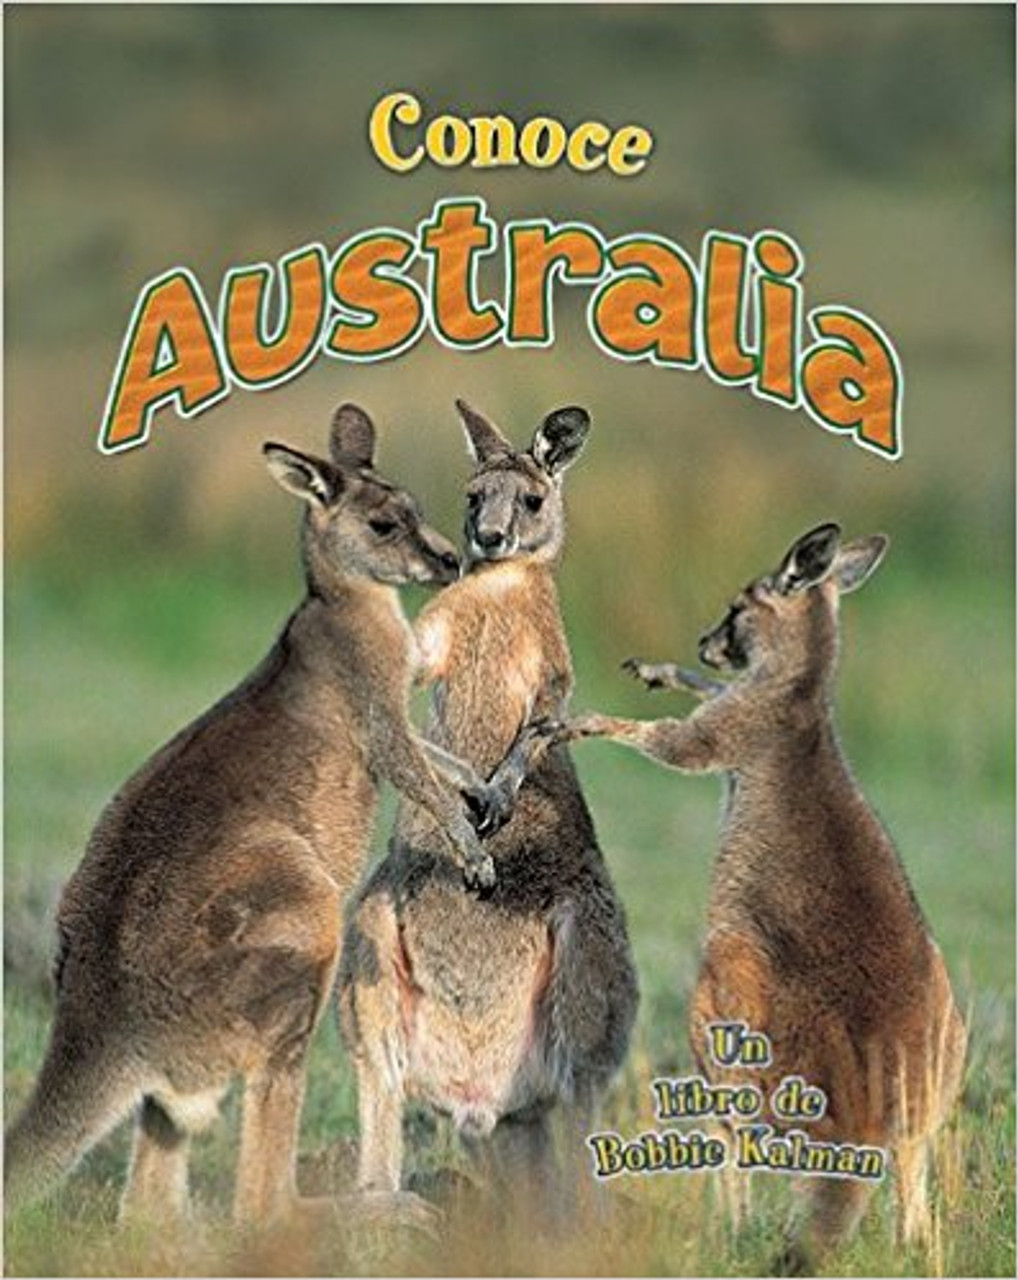 Conoce Australia by Bobbie Kalman